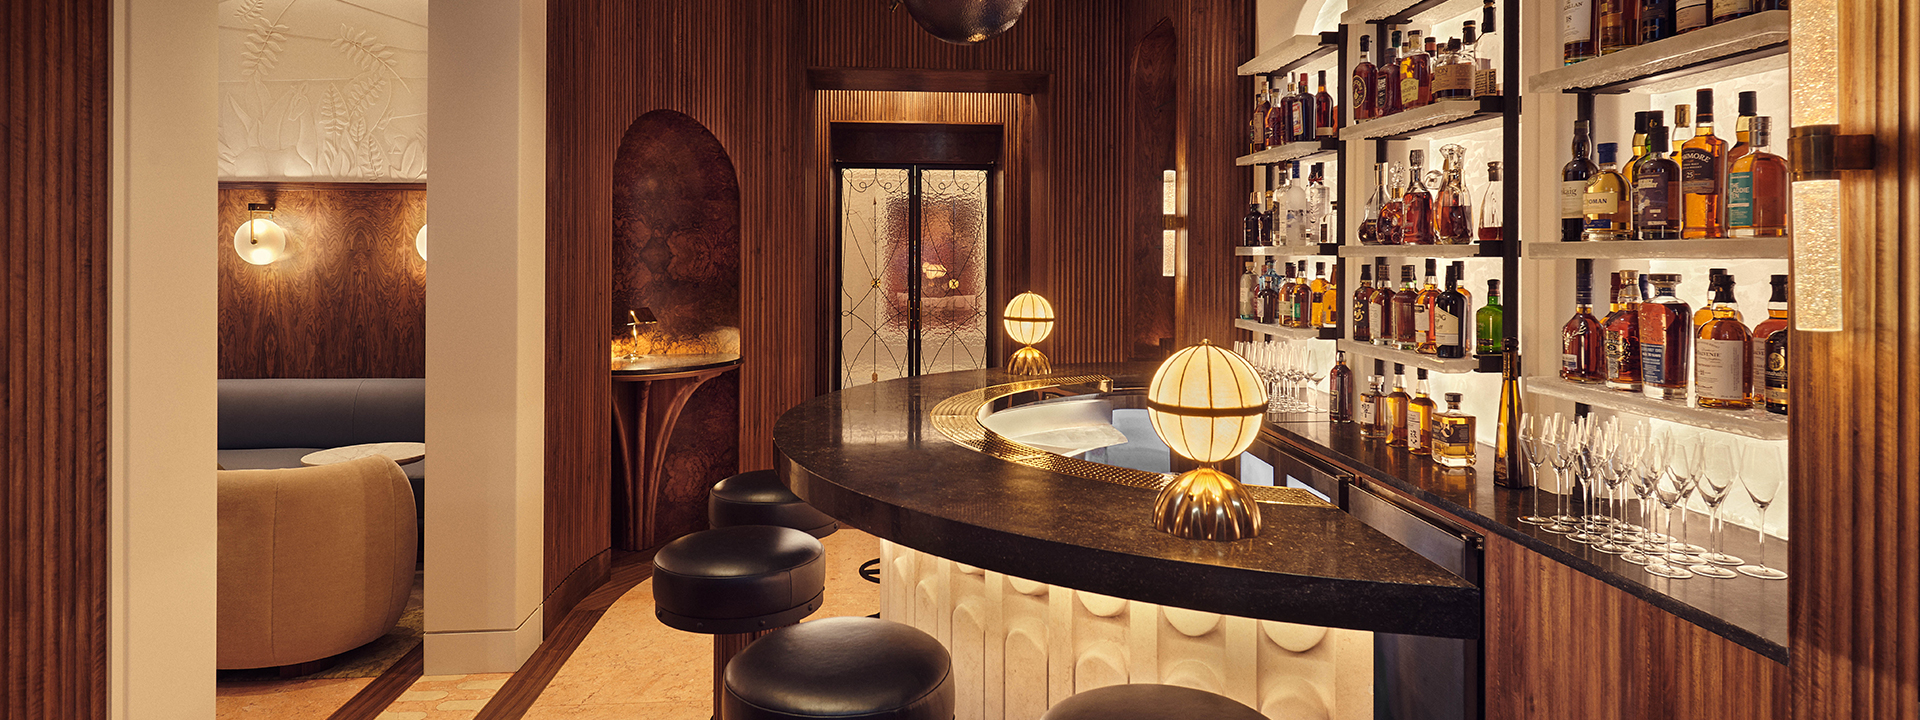 The Berkeley Bar & Terrace interior with  black marble semi circle bar, golden lighting and spirits displayed at The Berkeley